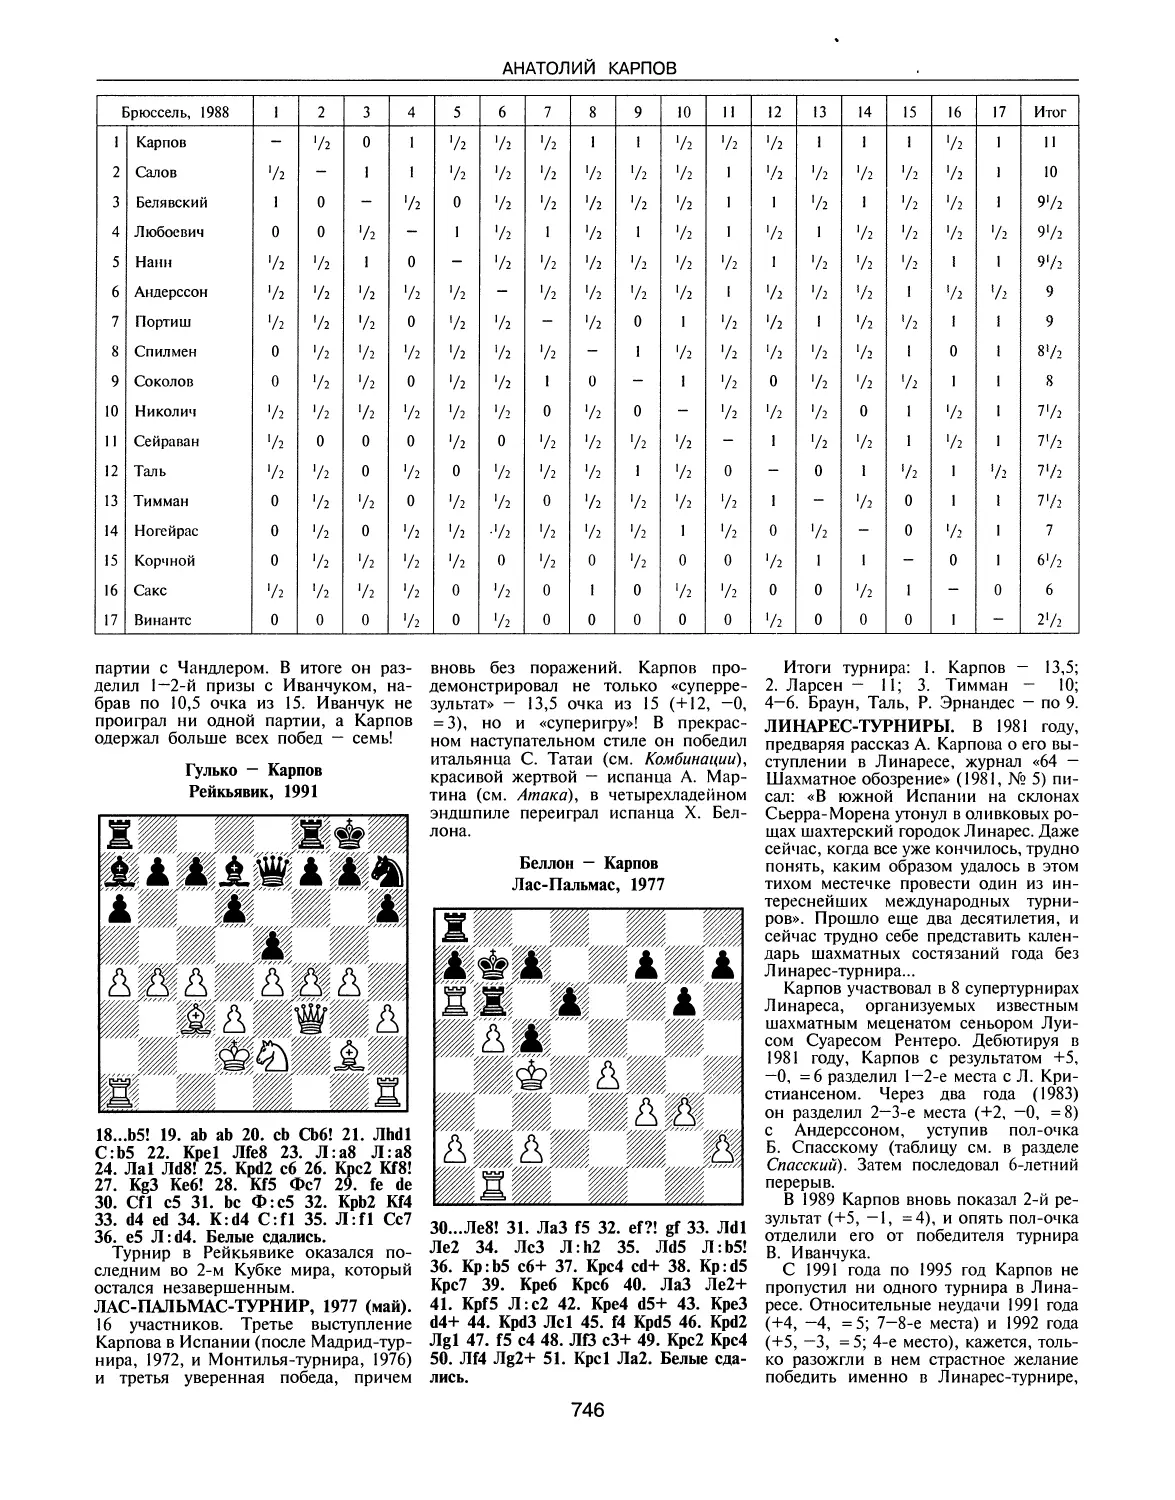 Лас-Пальмас-турнир, 1977
Линарес-турниры